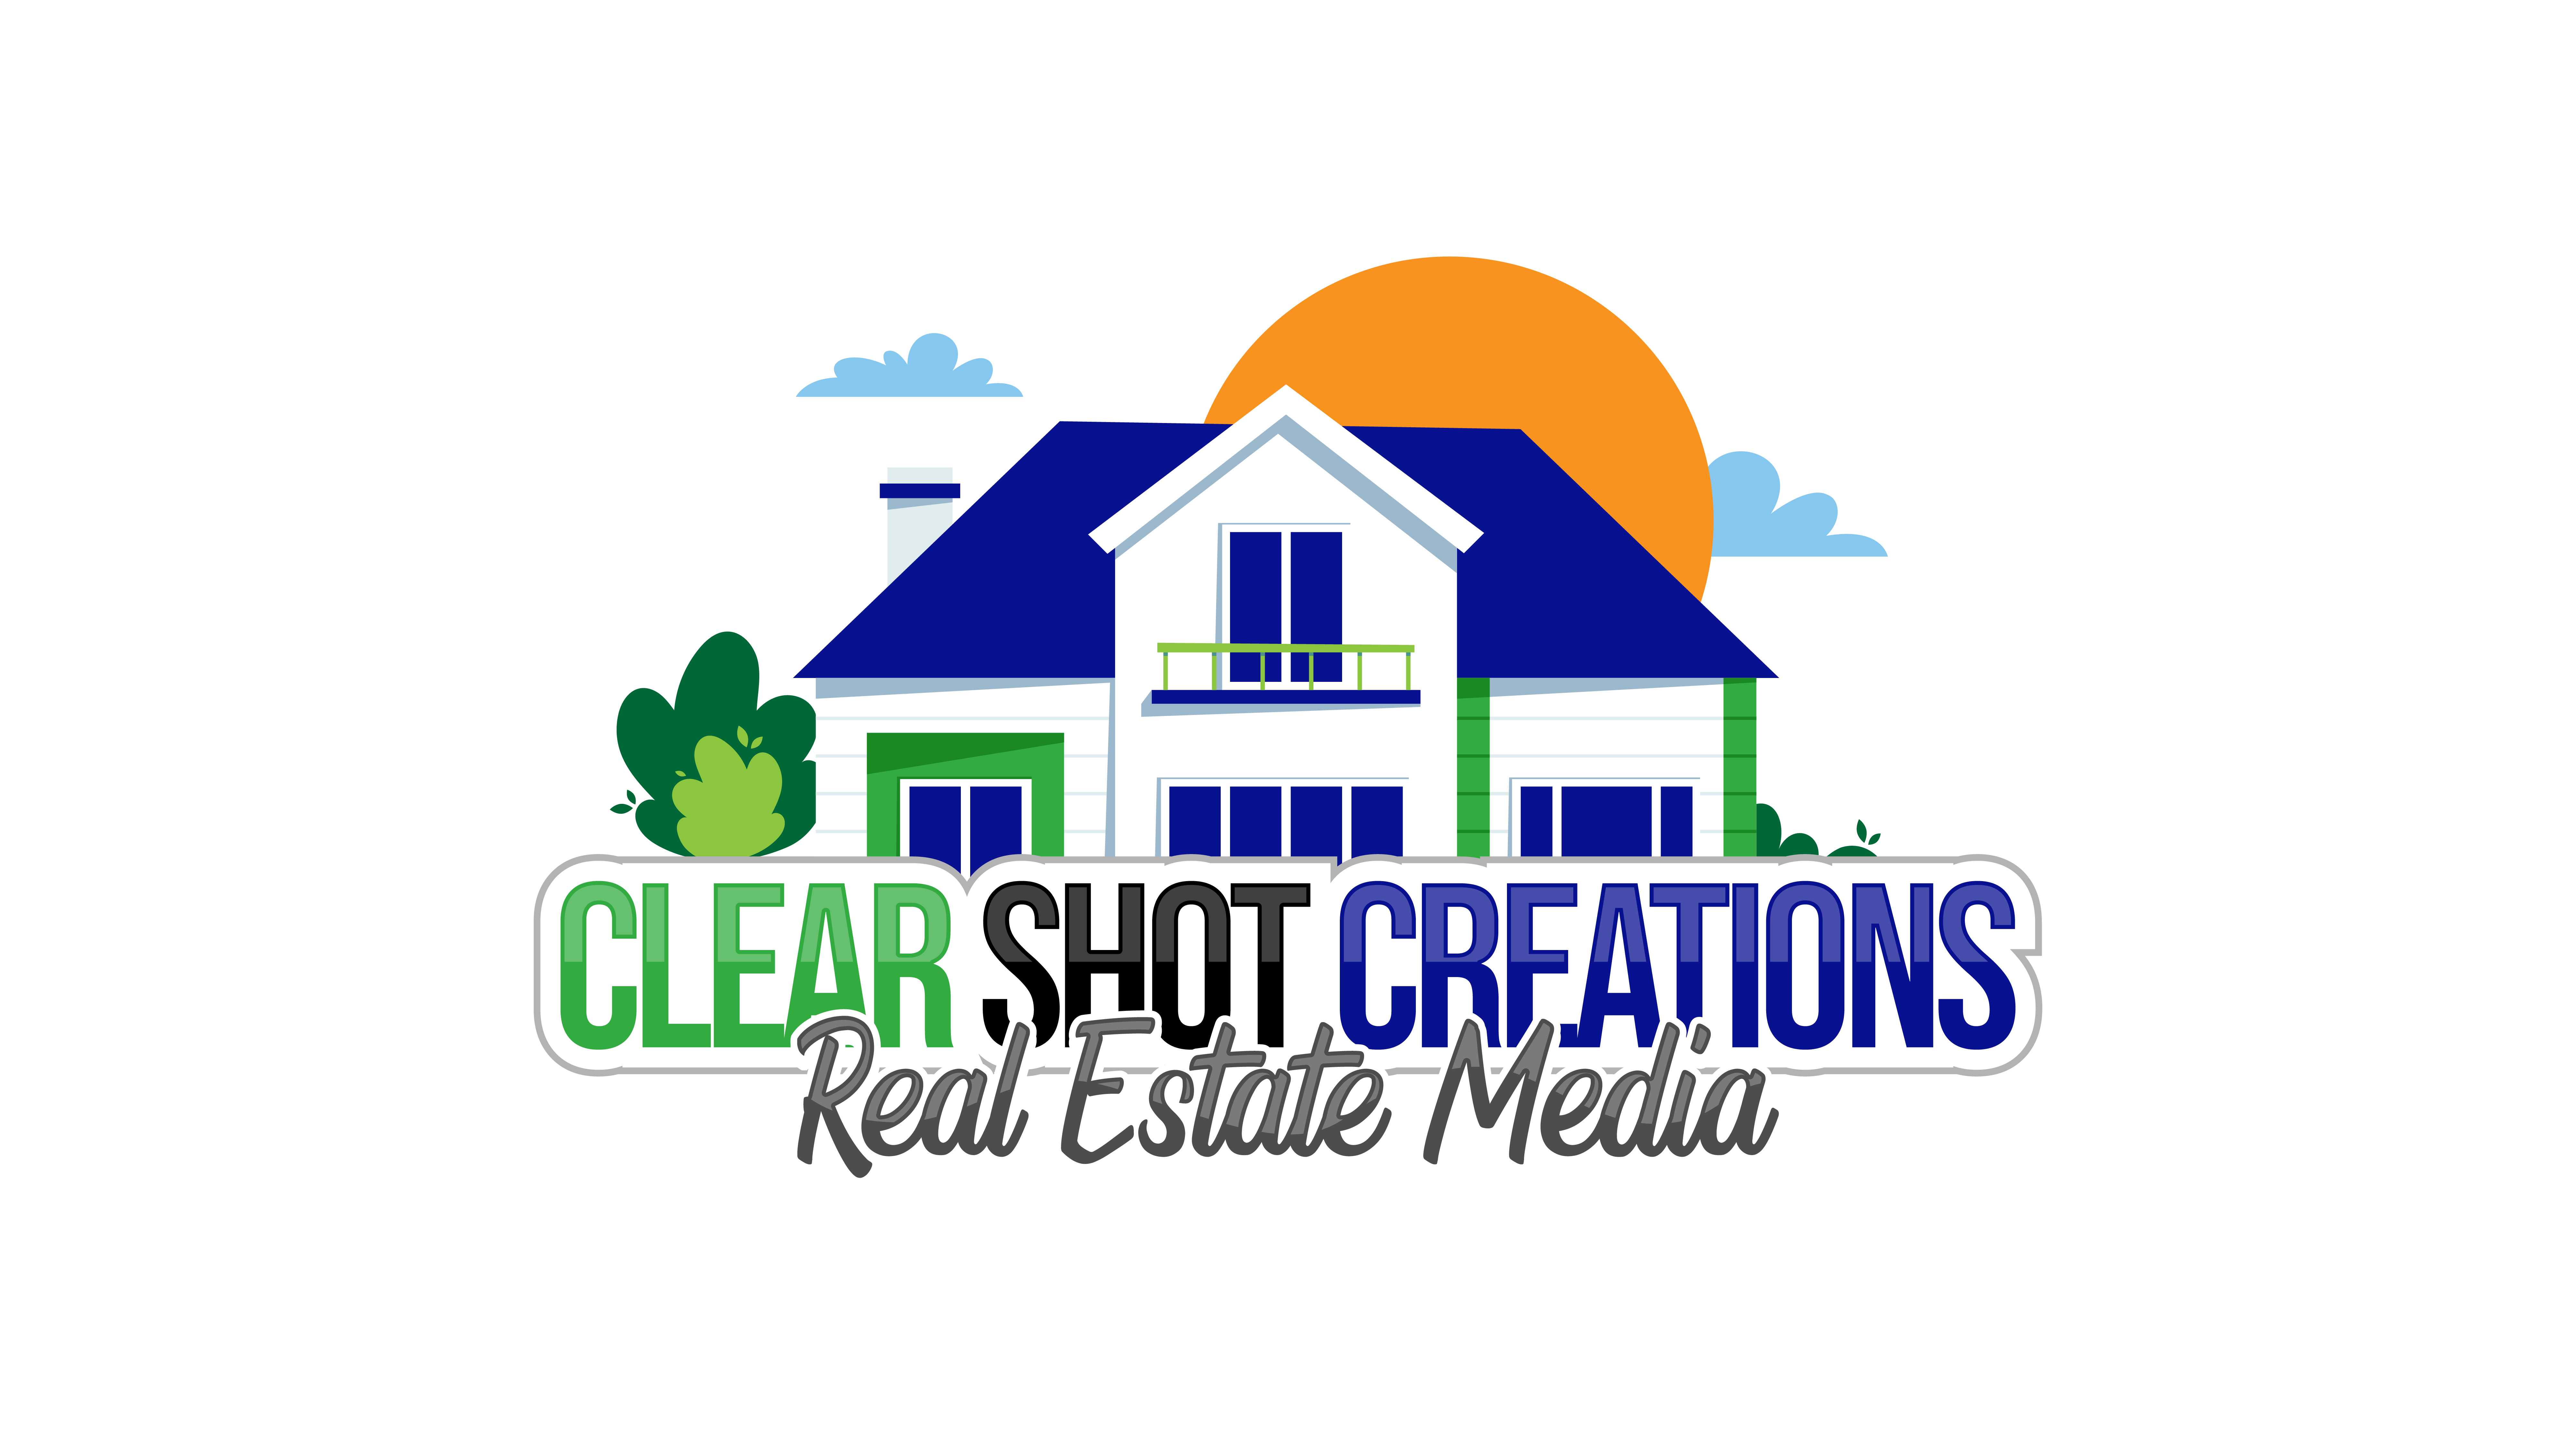 ClearShotCreations